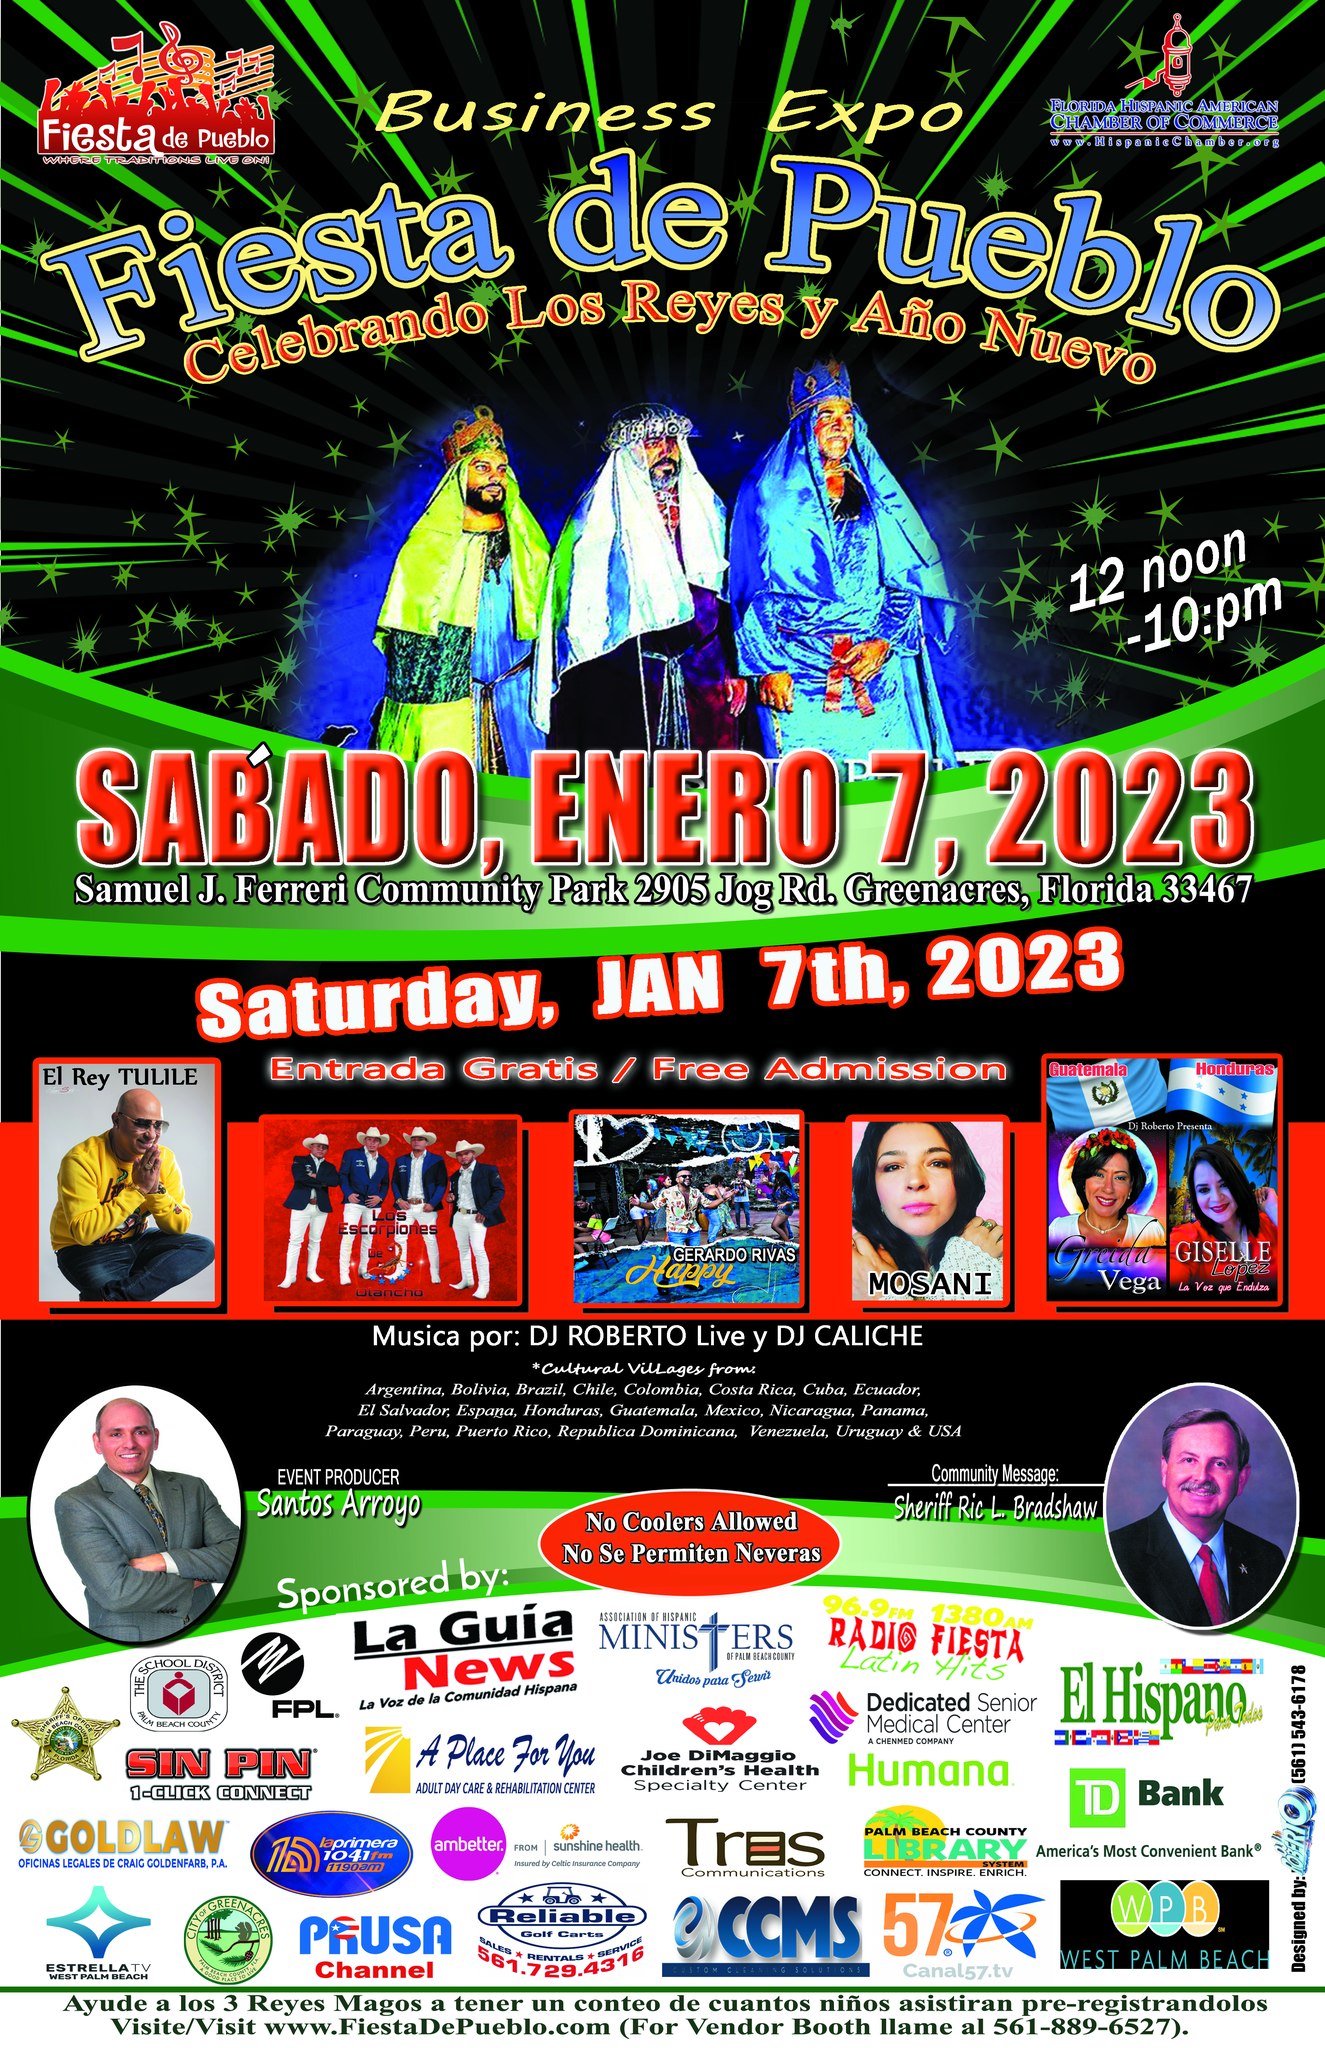 Fiesta De Pueblo & Business Expo 2023